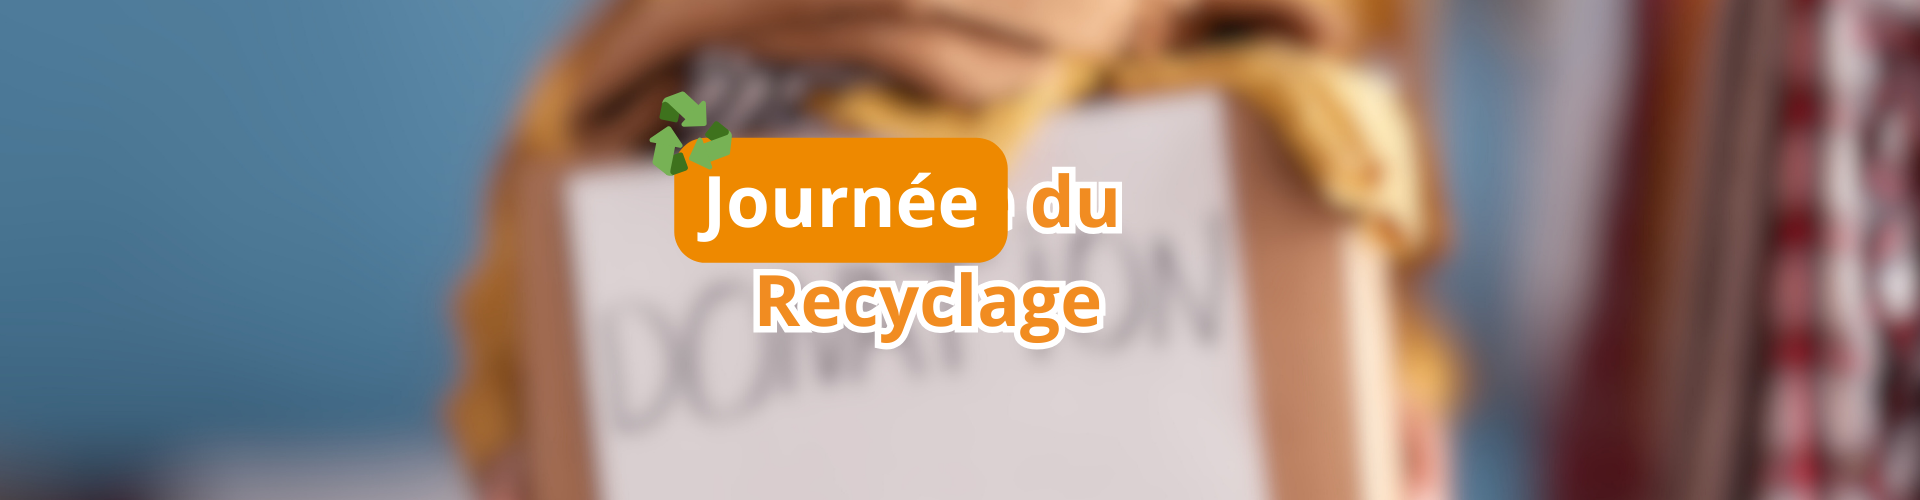 image-journee-recyclage